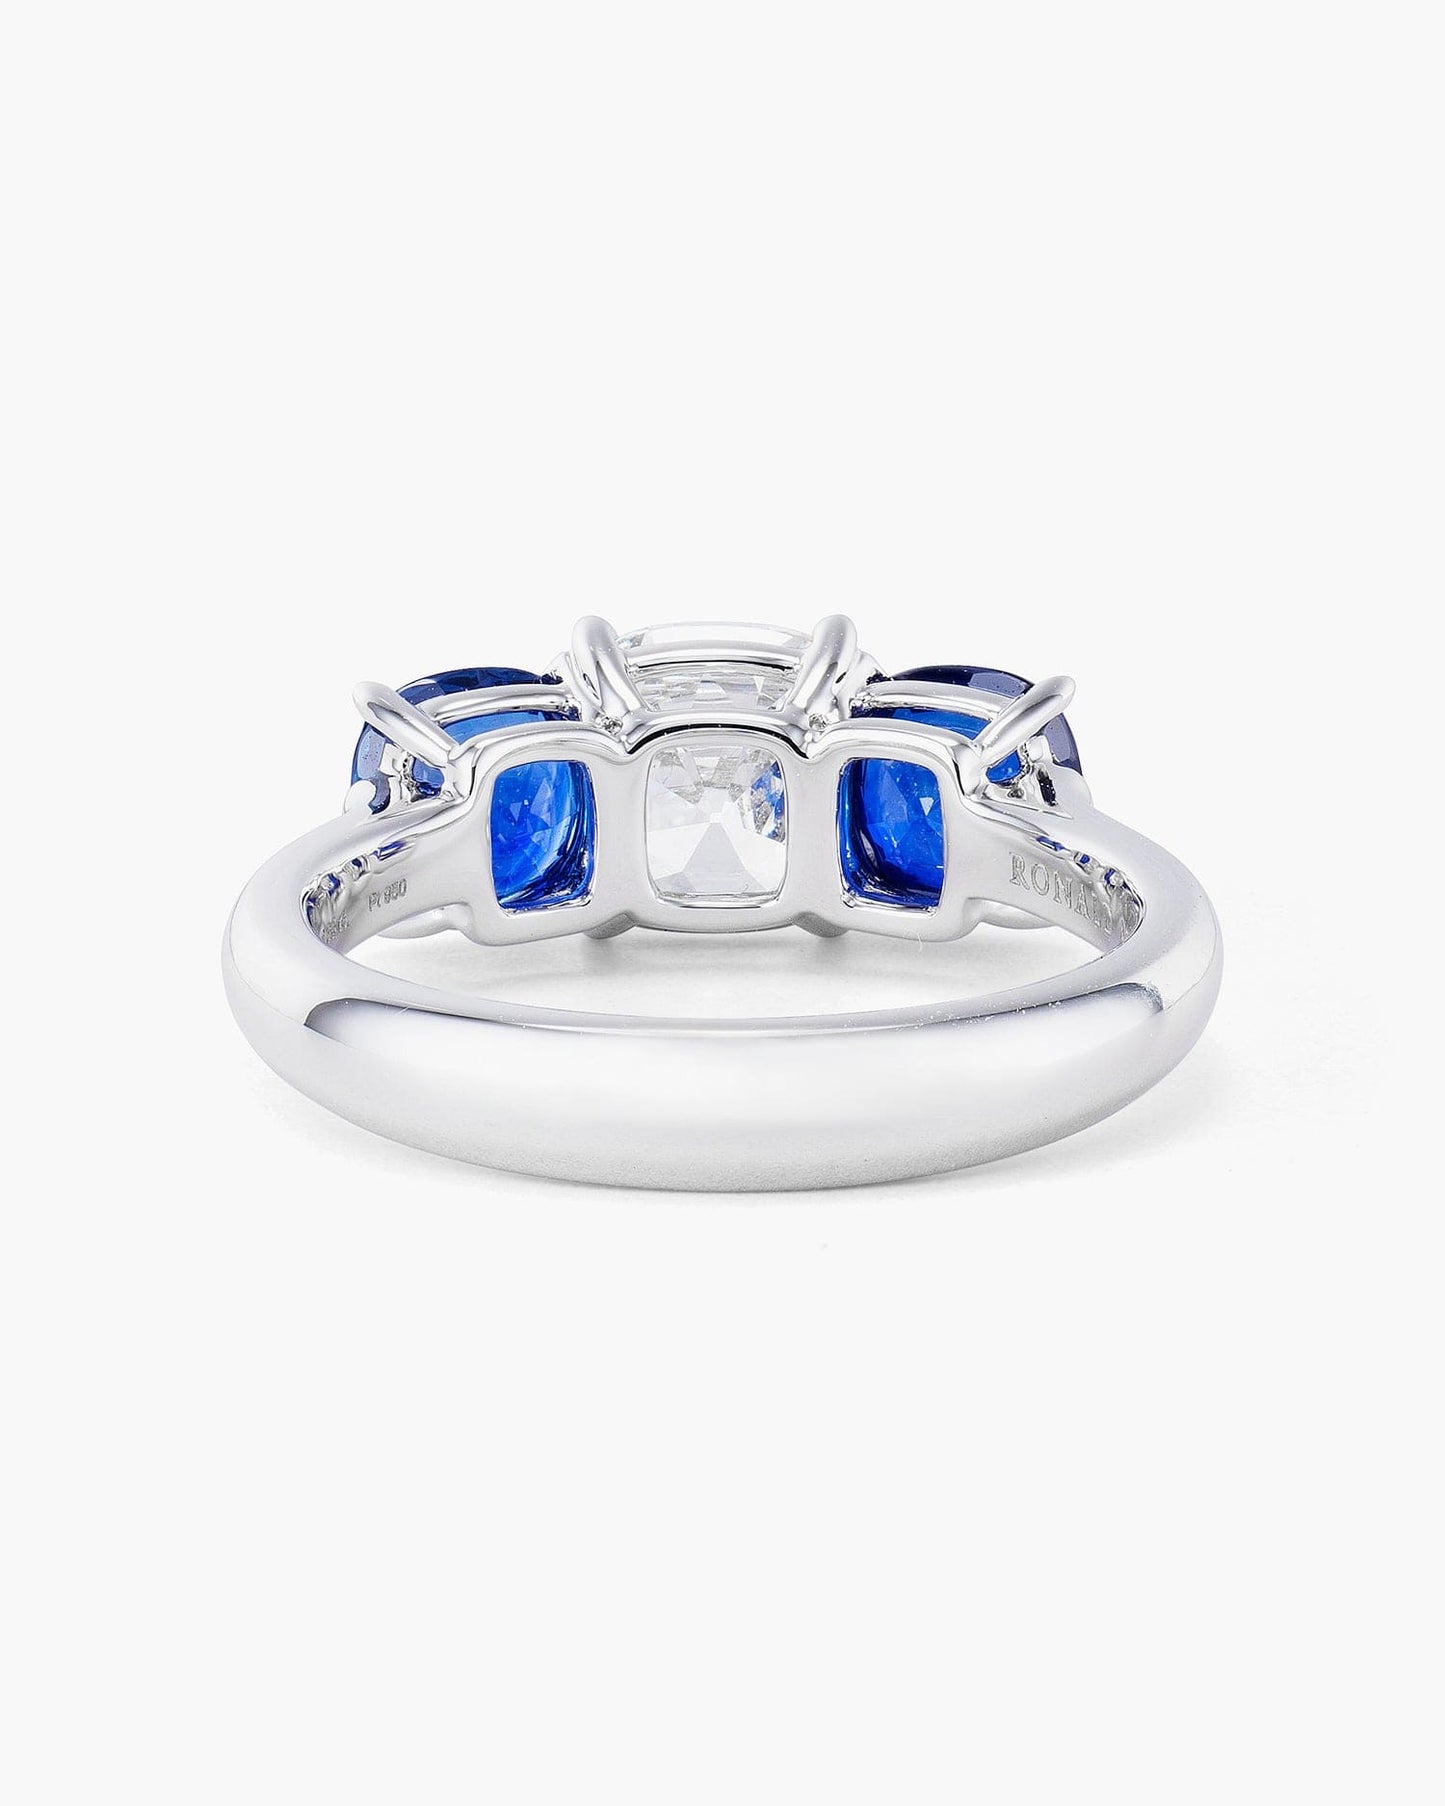 1.13 carat Antique Cushion Cut Diamond and Sapphire Ring